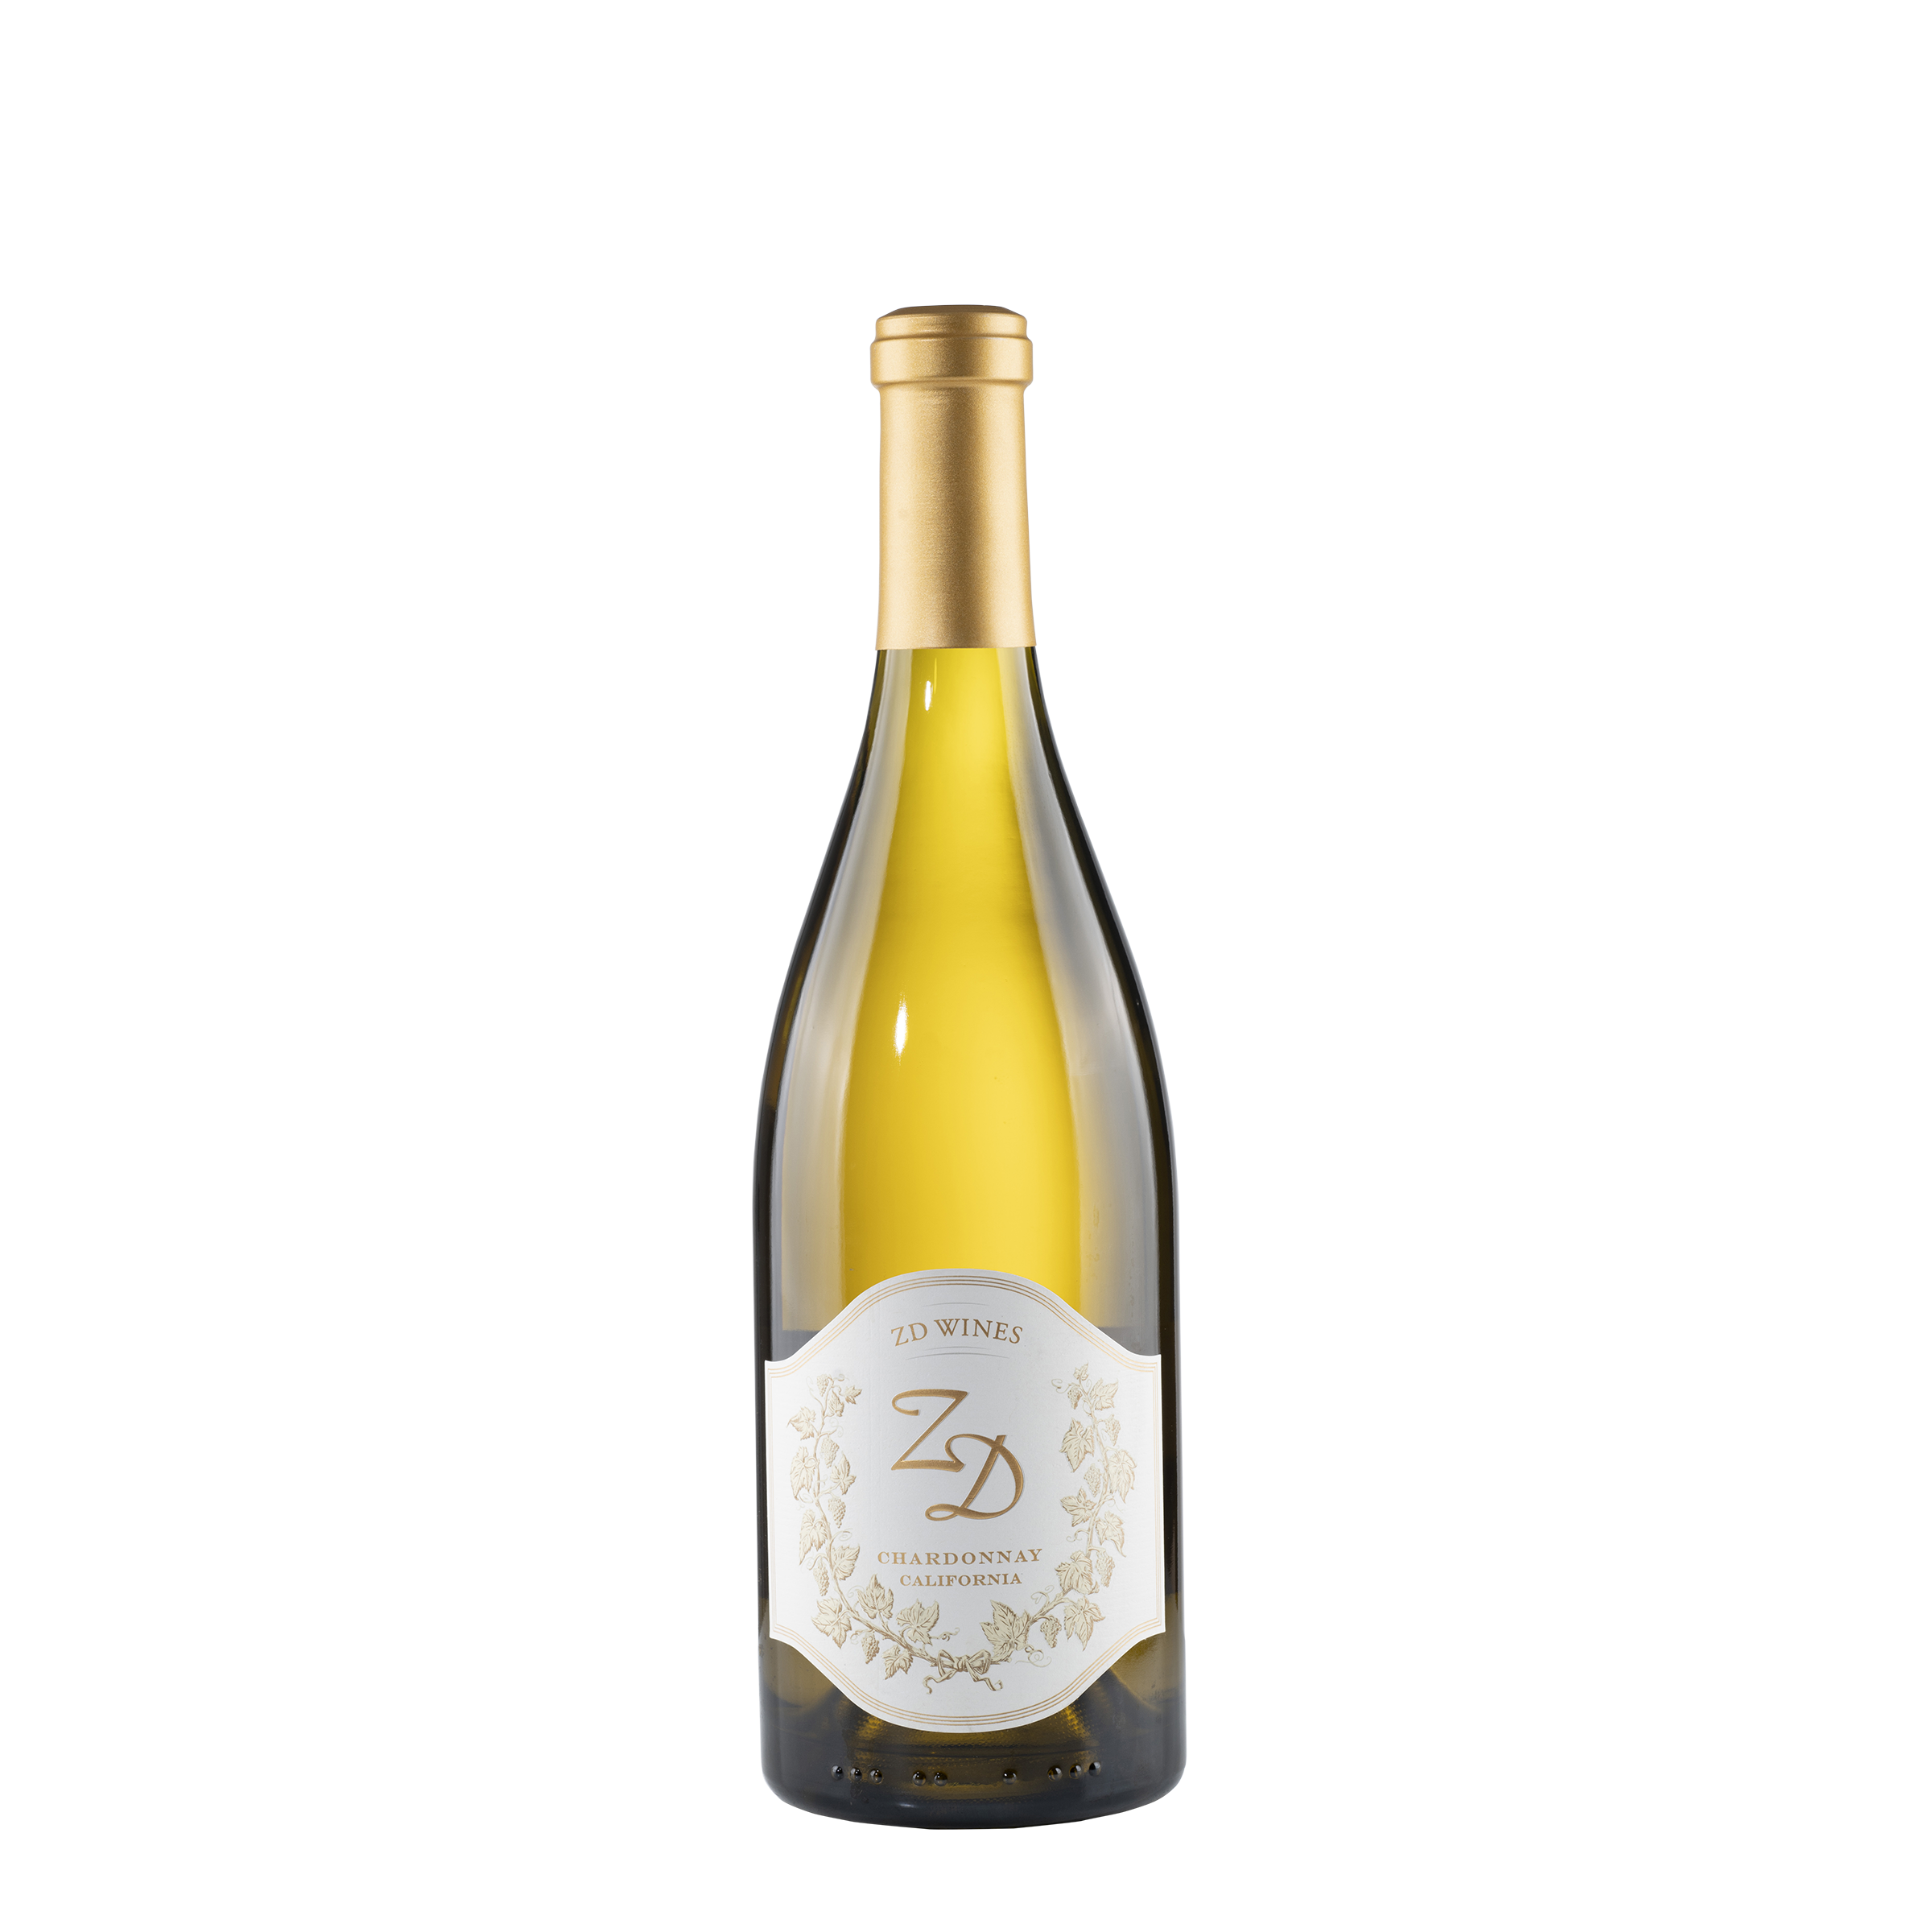 ZD Wines Chardonnay 2021 Bottle Front